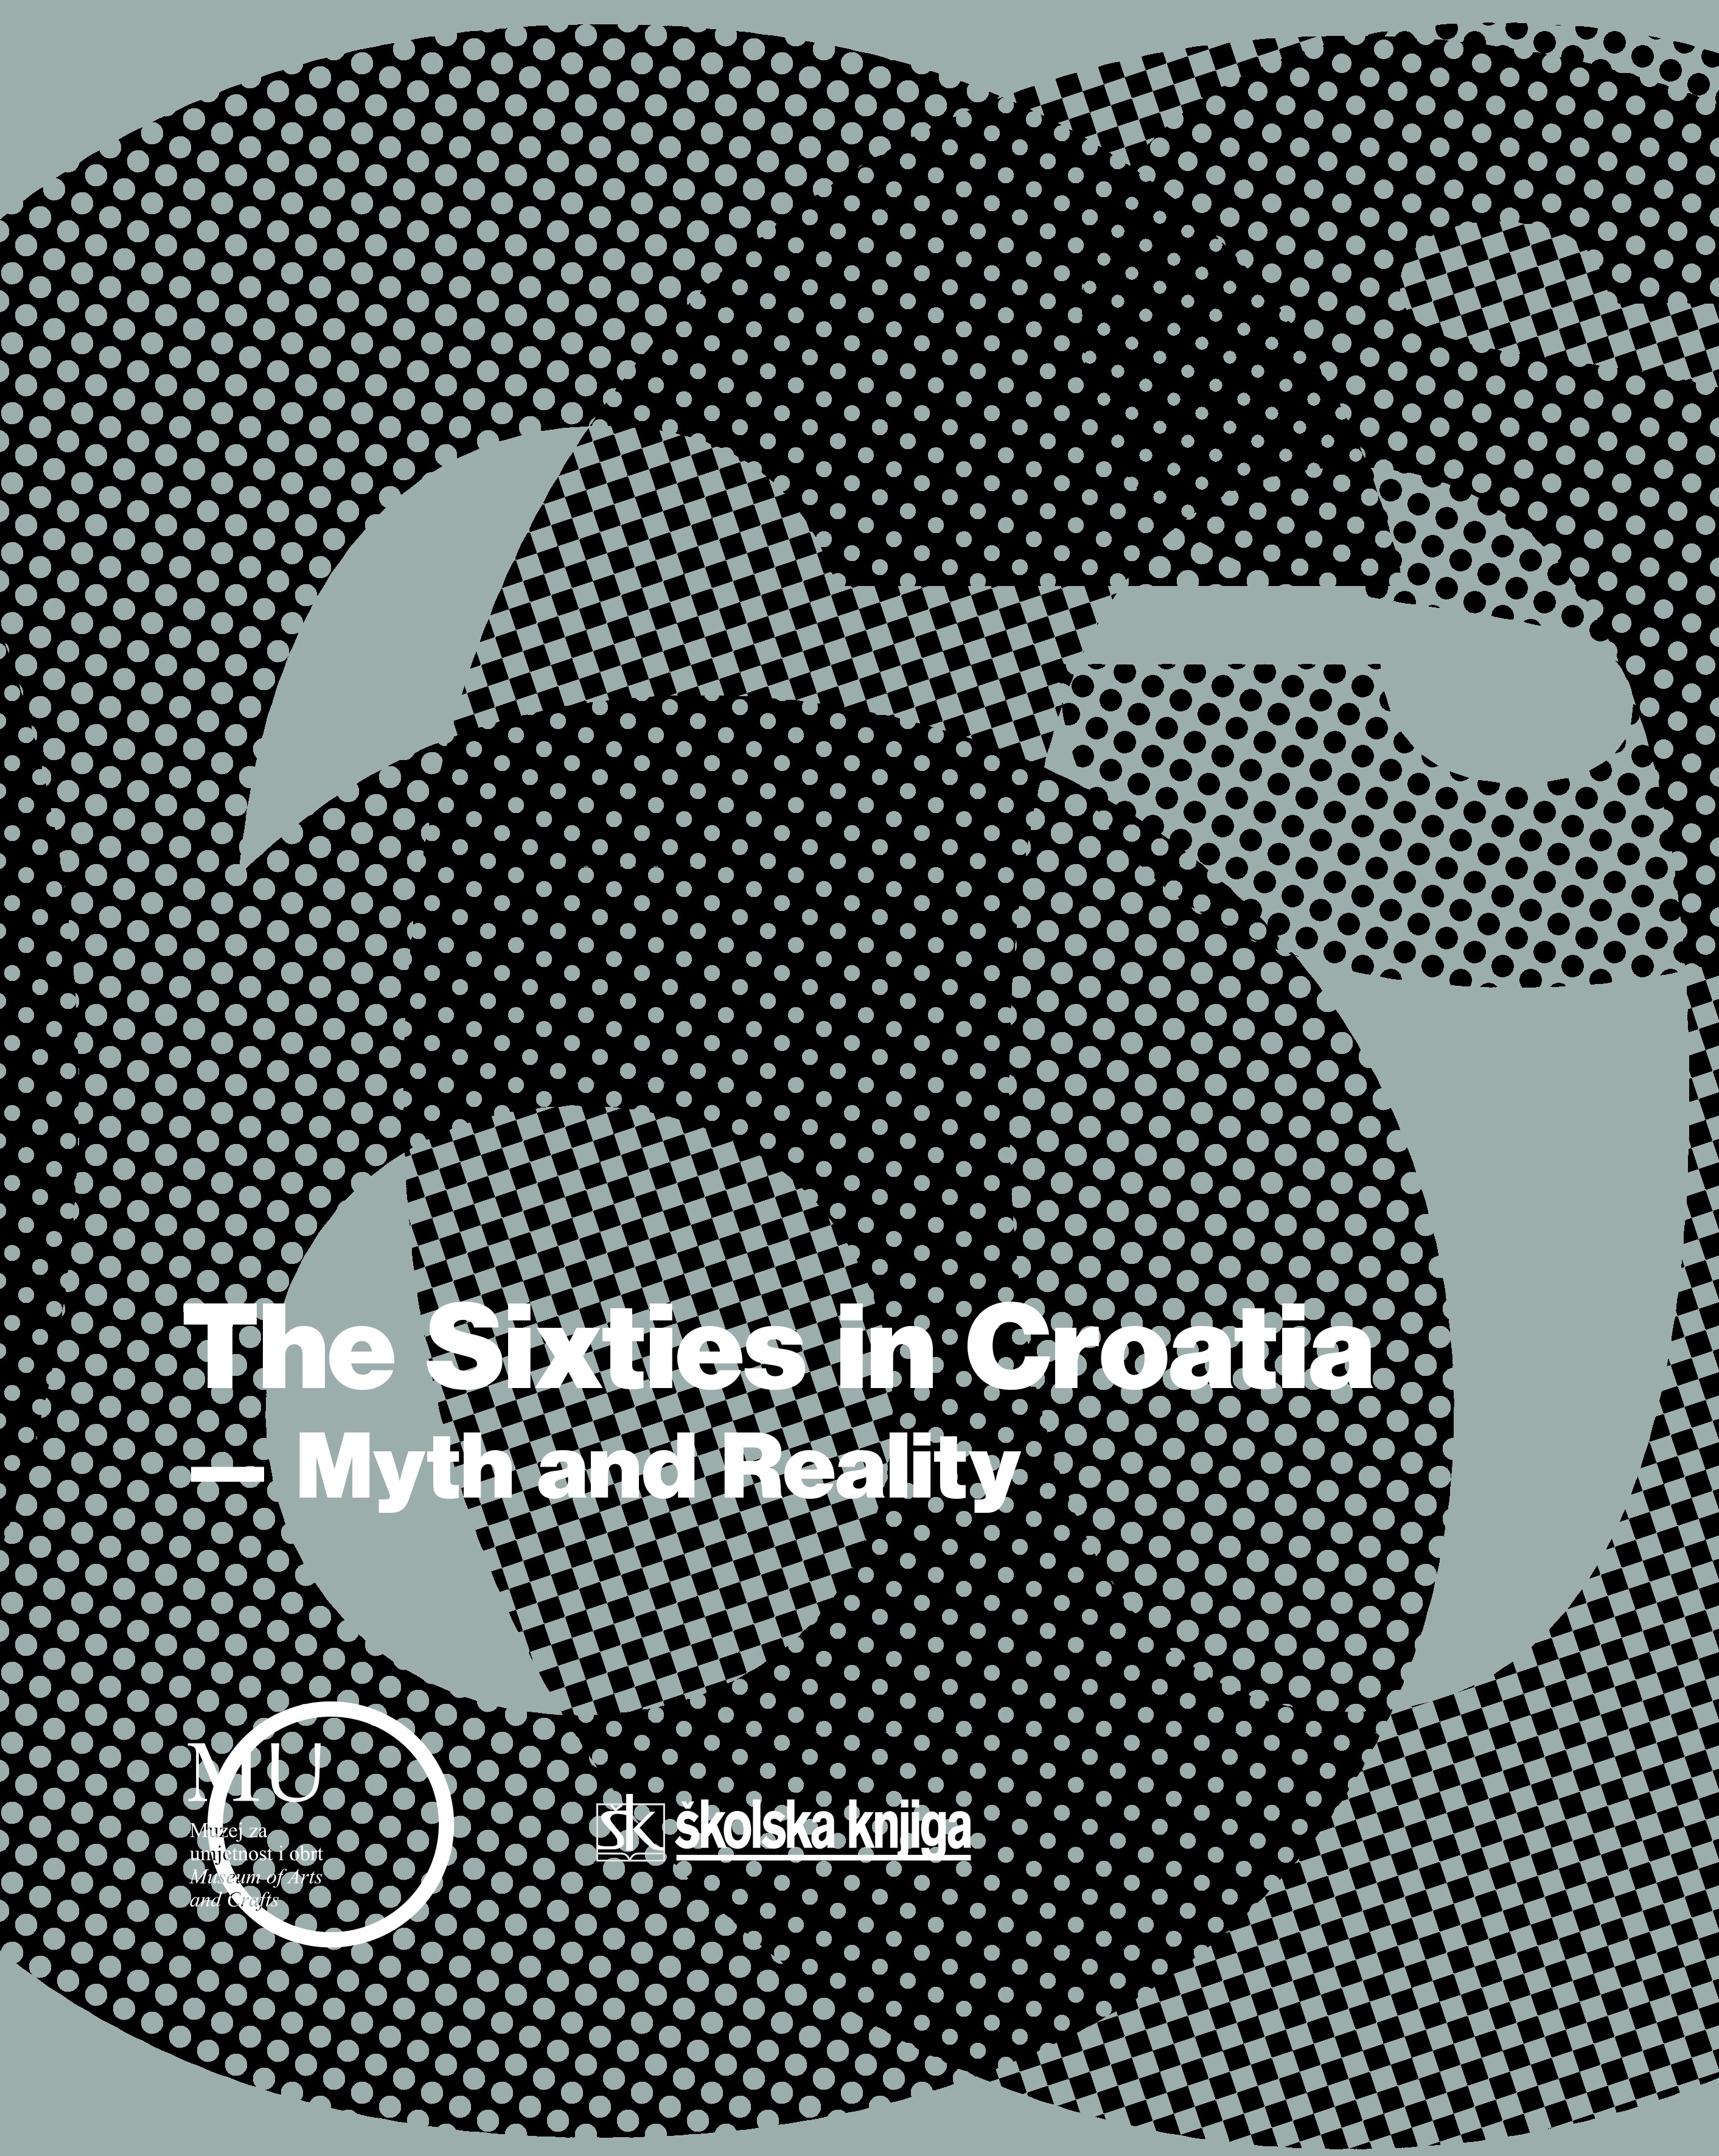 The Sixties in Croatia – Myth and Reality